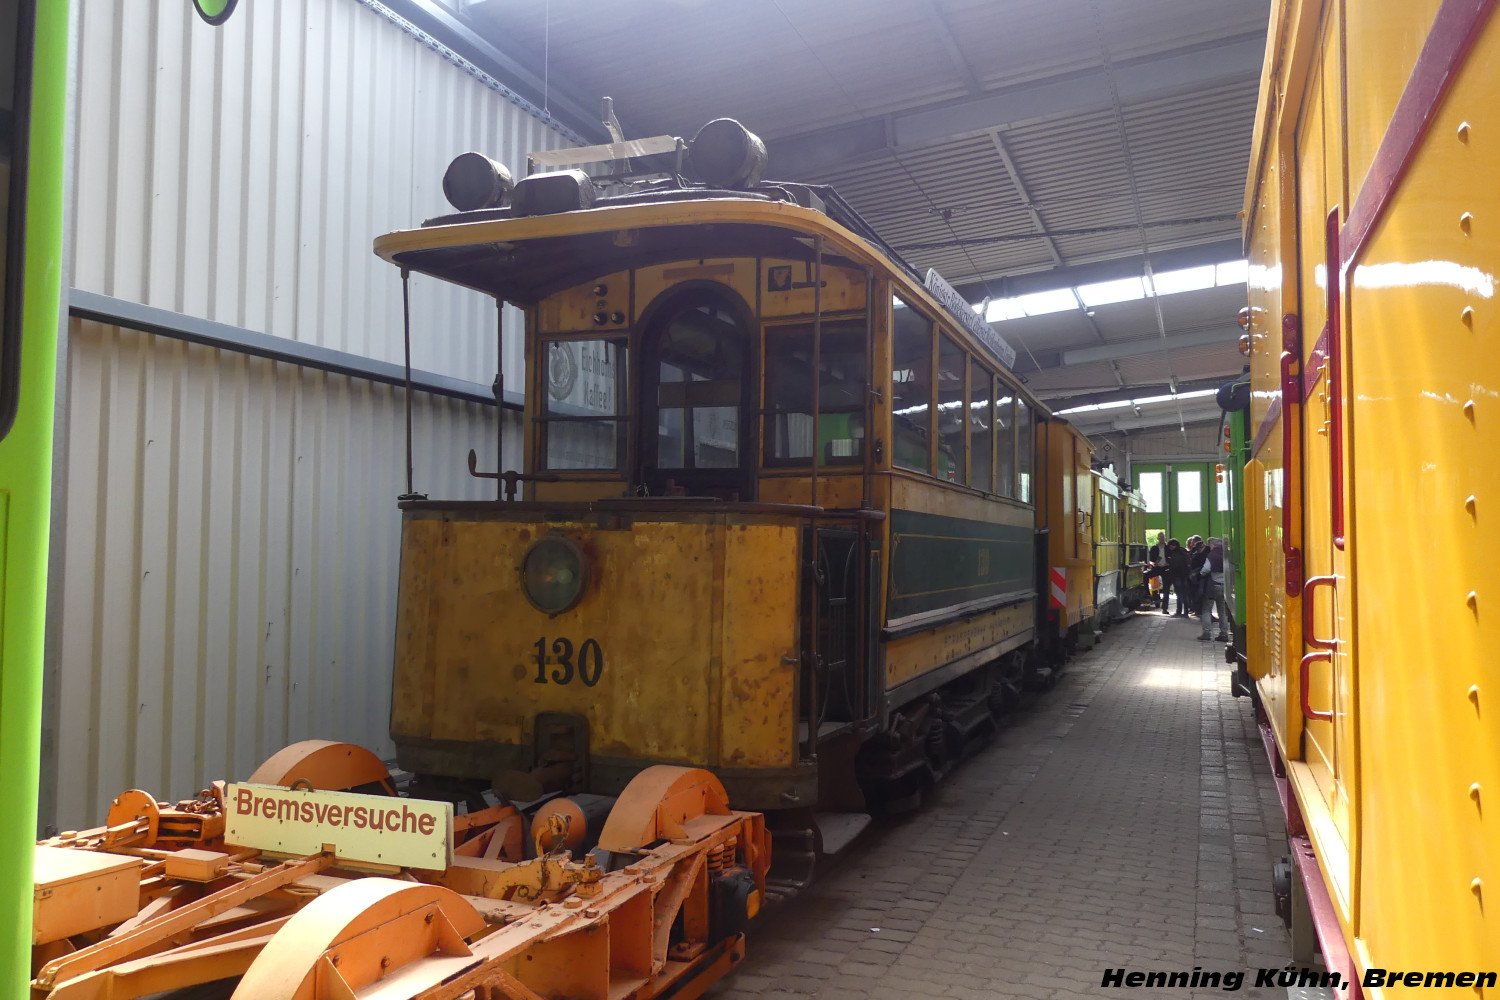 Miscellaneous 2-axle tram #130